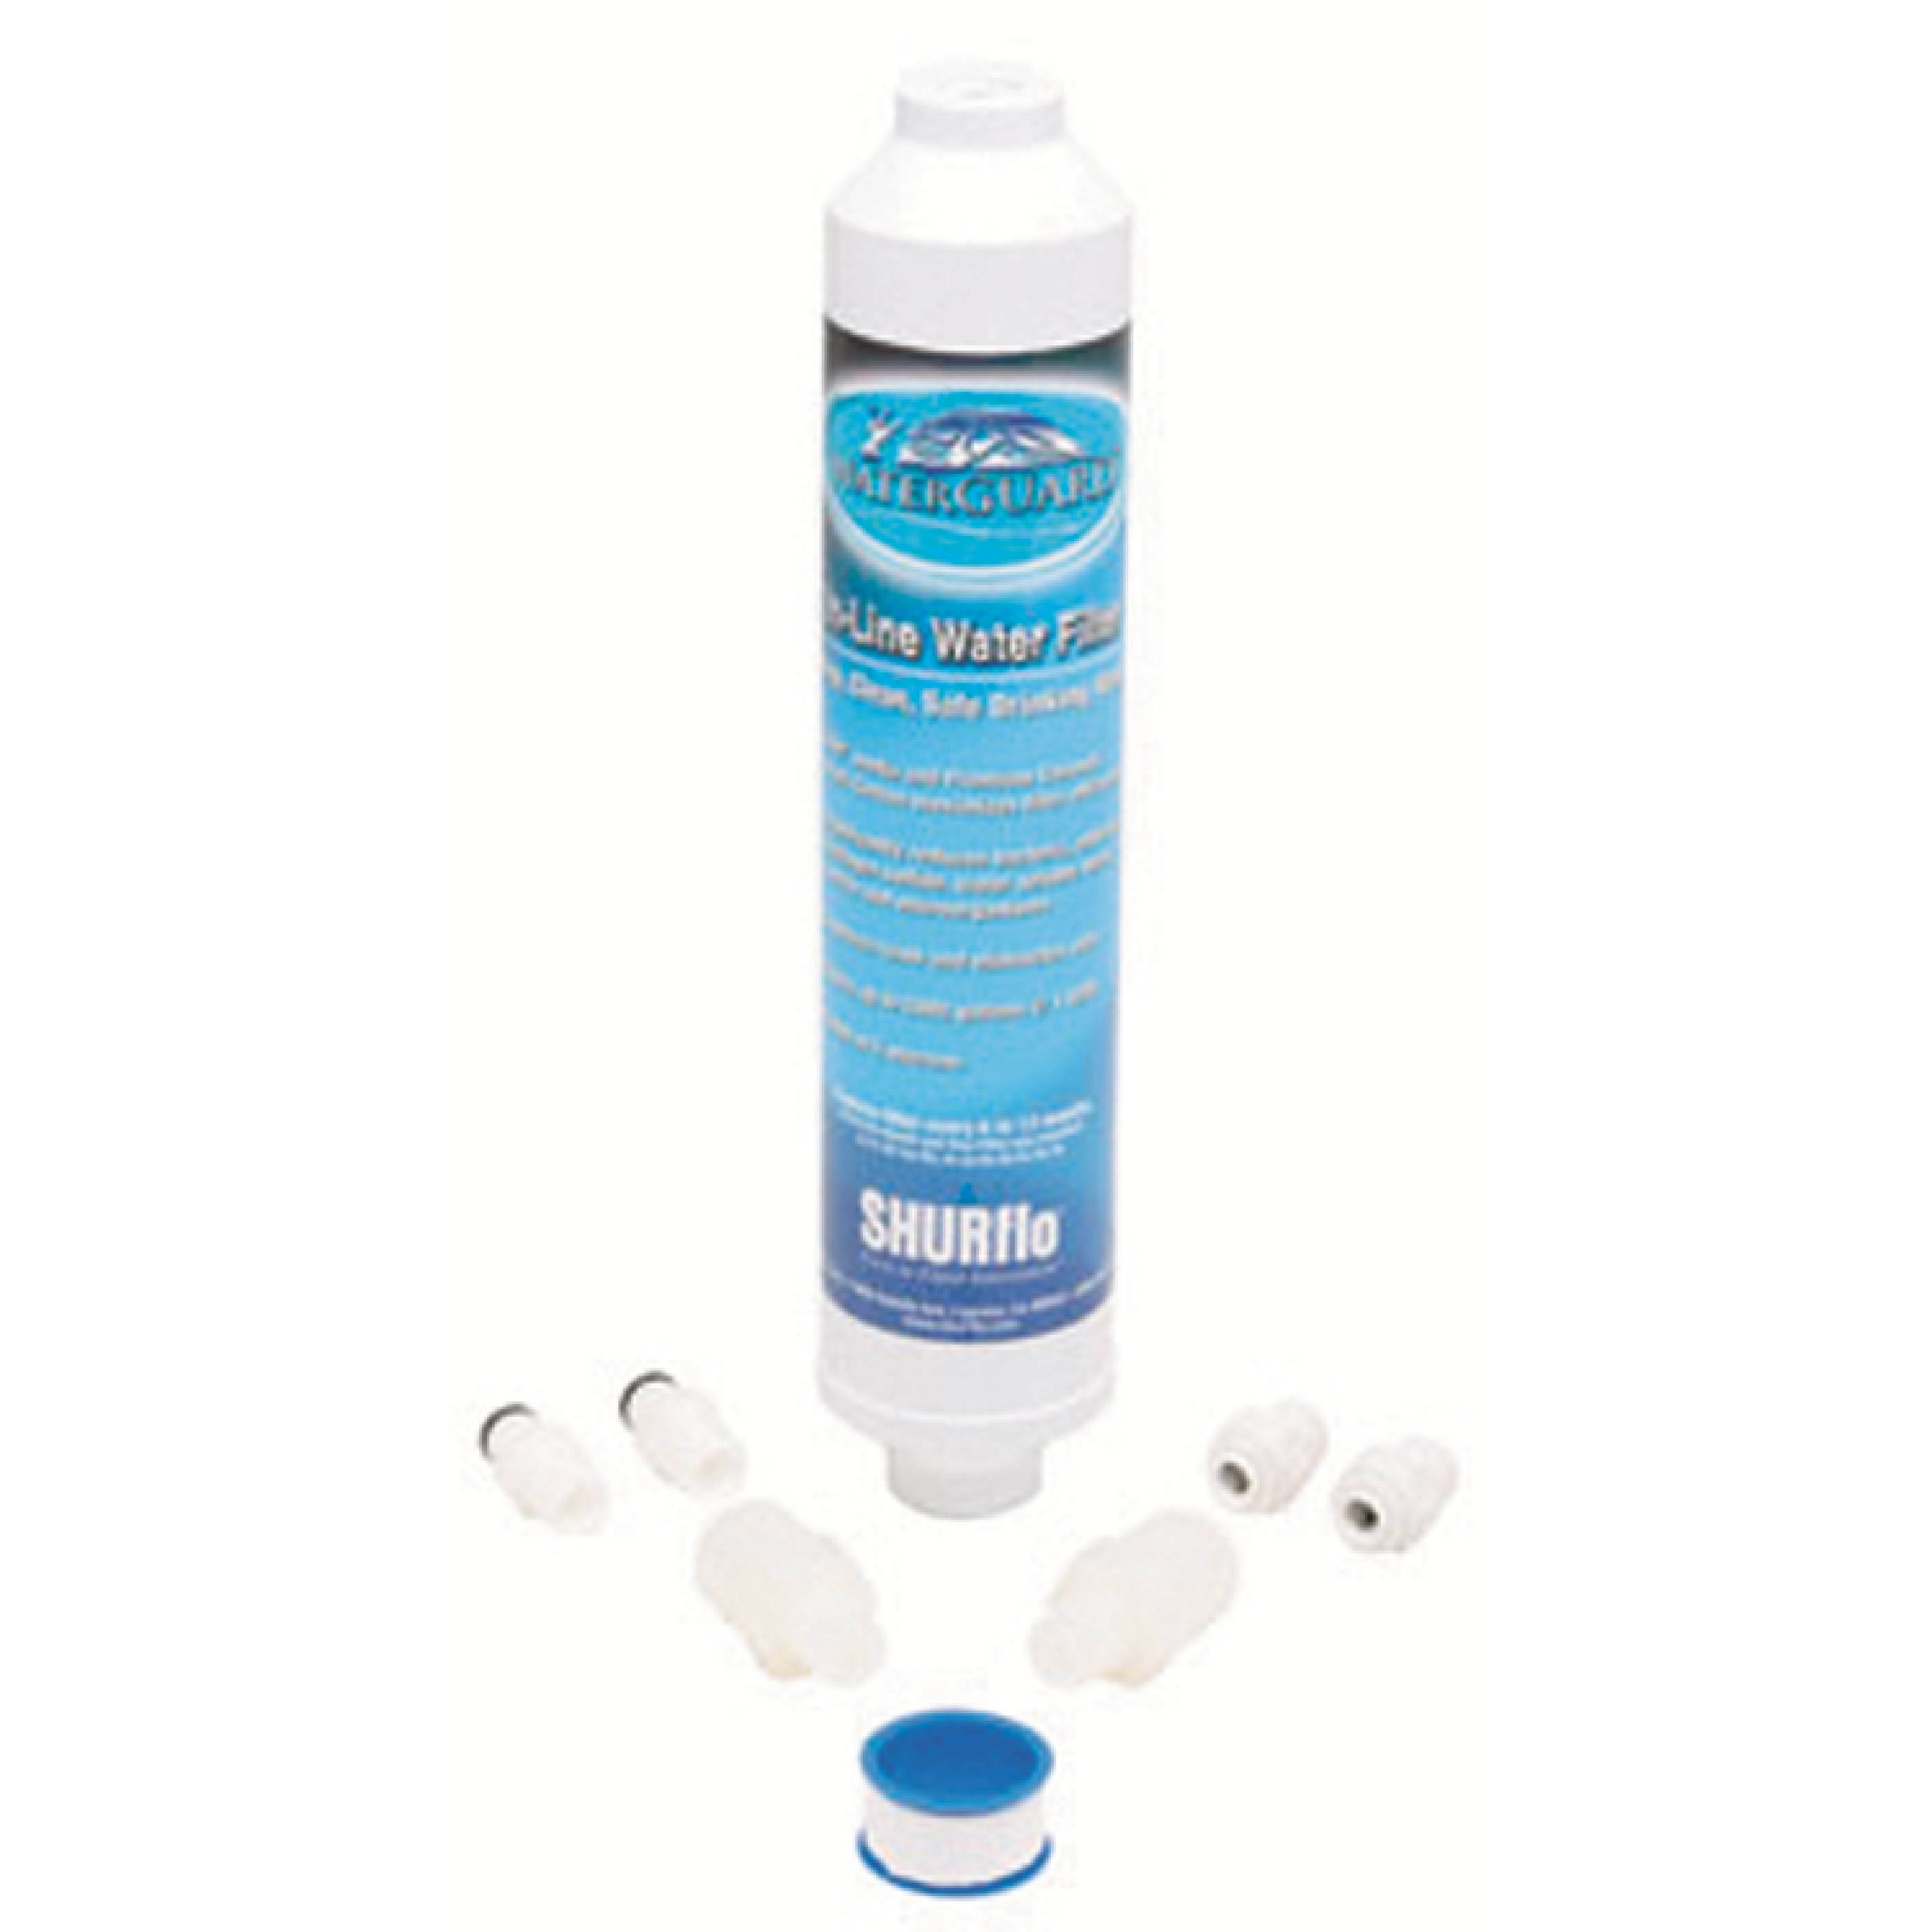 Camco TastePURE RV Water Filter - Reduces Bad Taste, Odor, Chlorine and  More - 2-Pack, Blue (40045) 